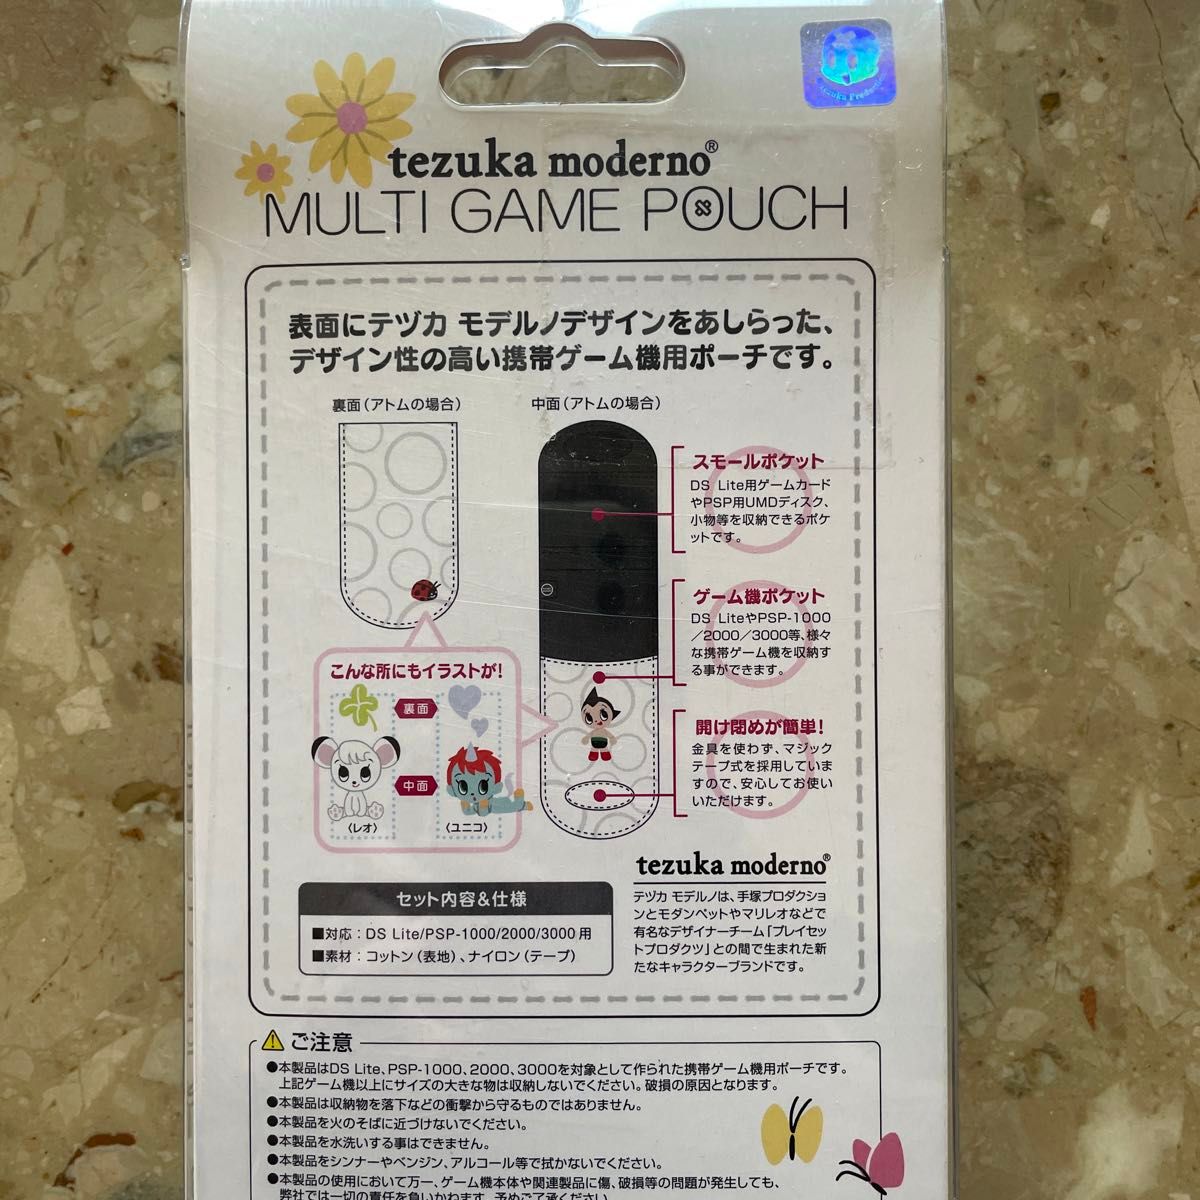 tezuka moderno マルチゲームポーチ (DS Lite/DSi、PSP-1000/2000/3000用) <アトム>